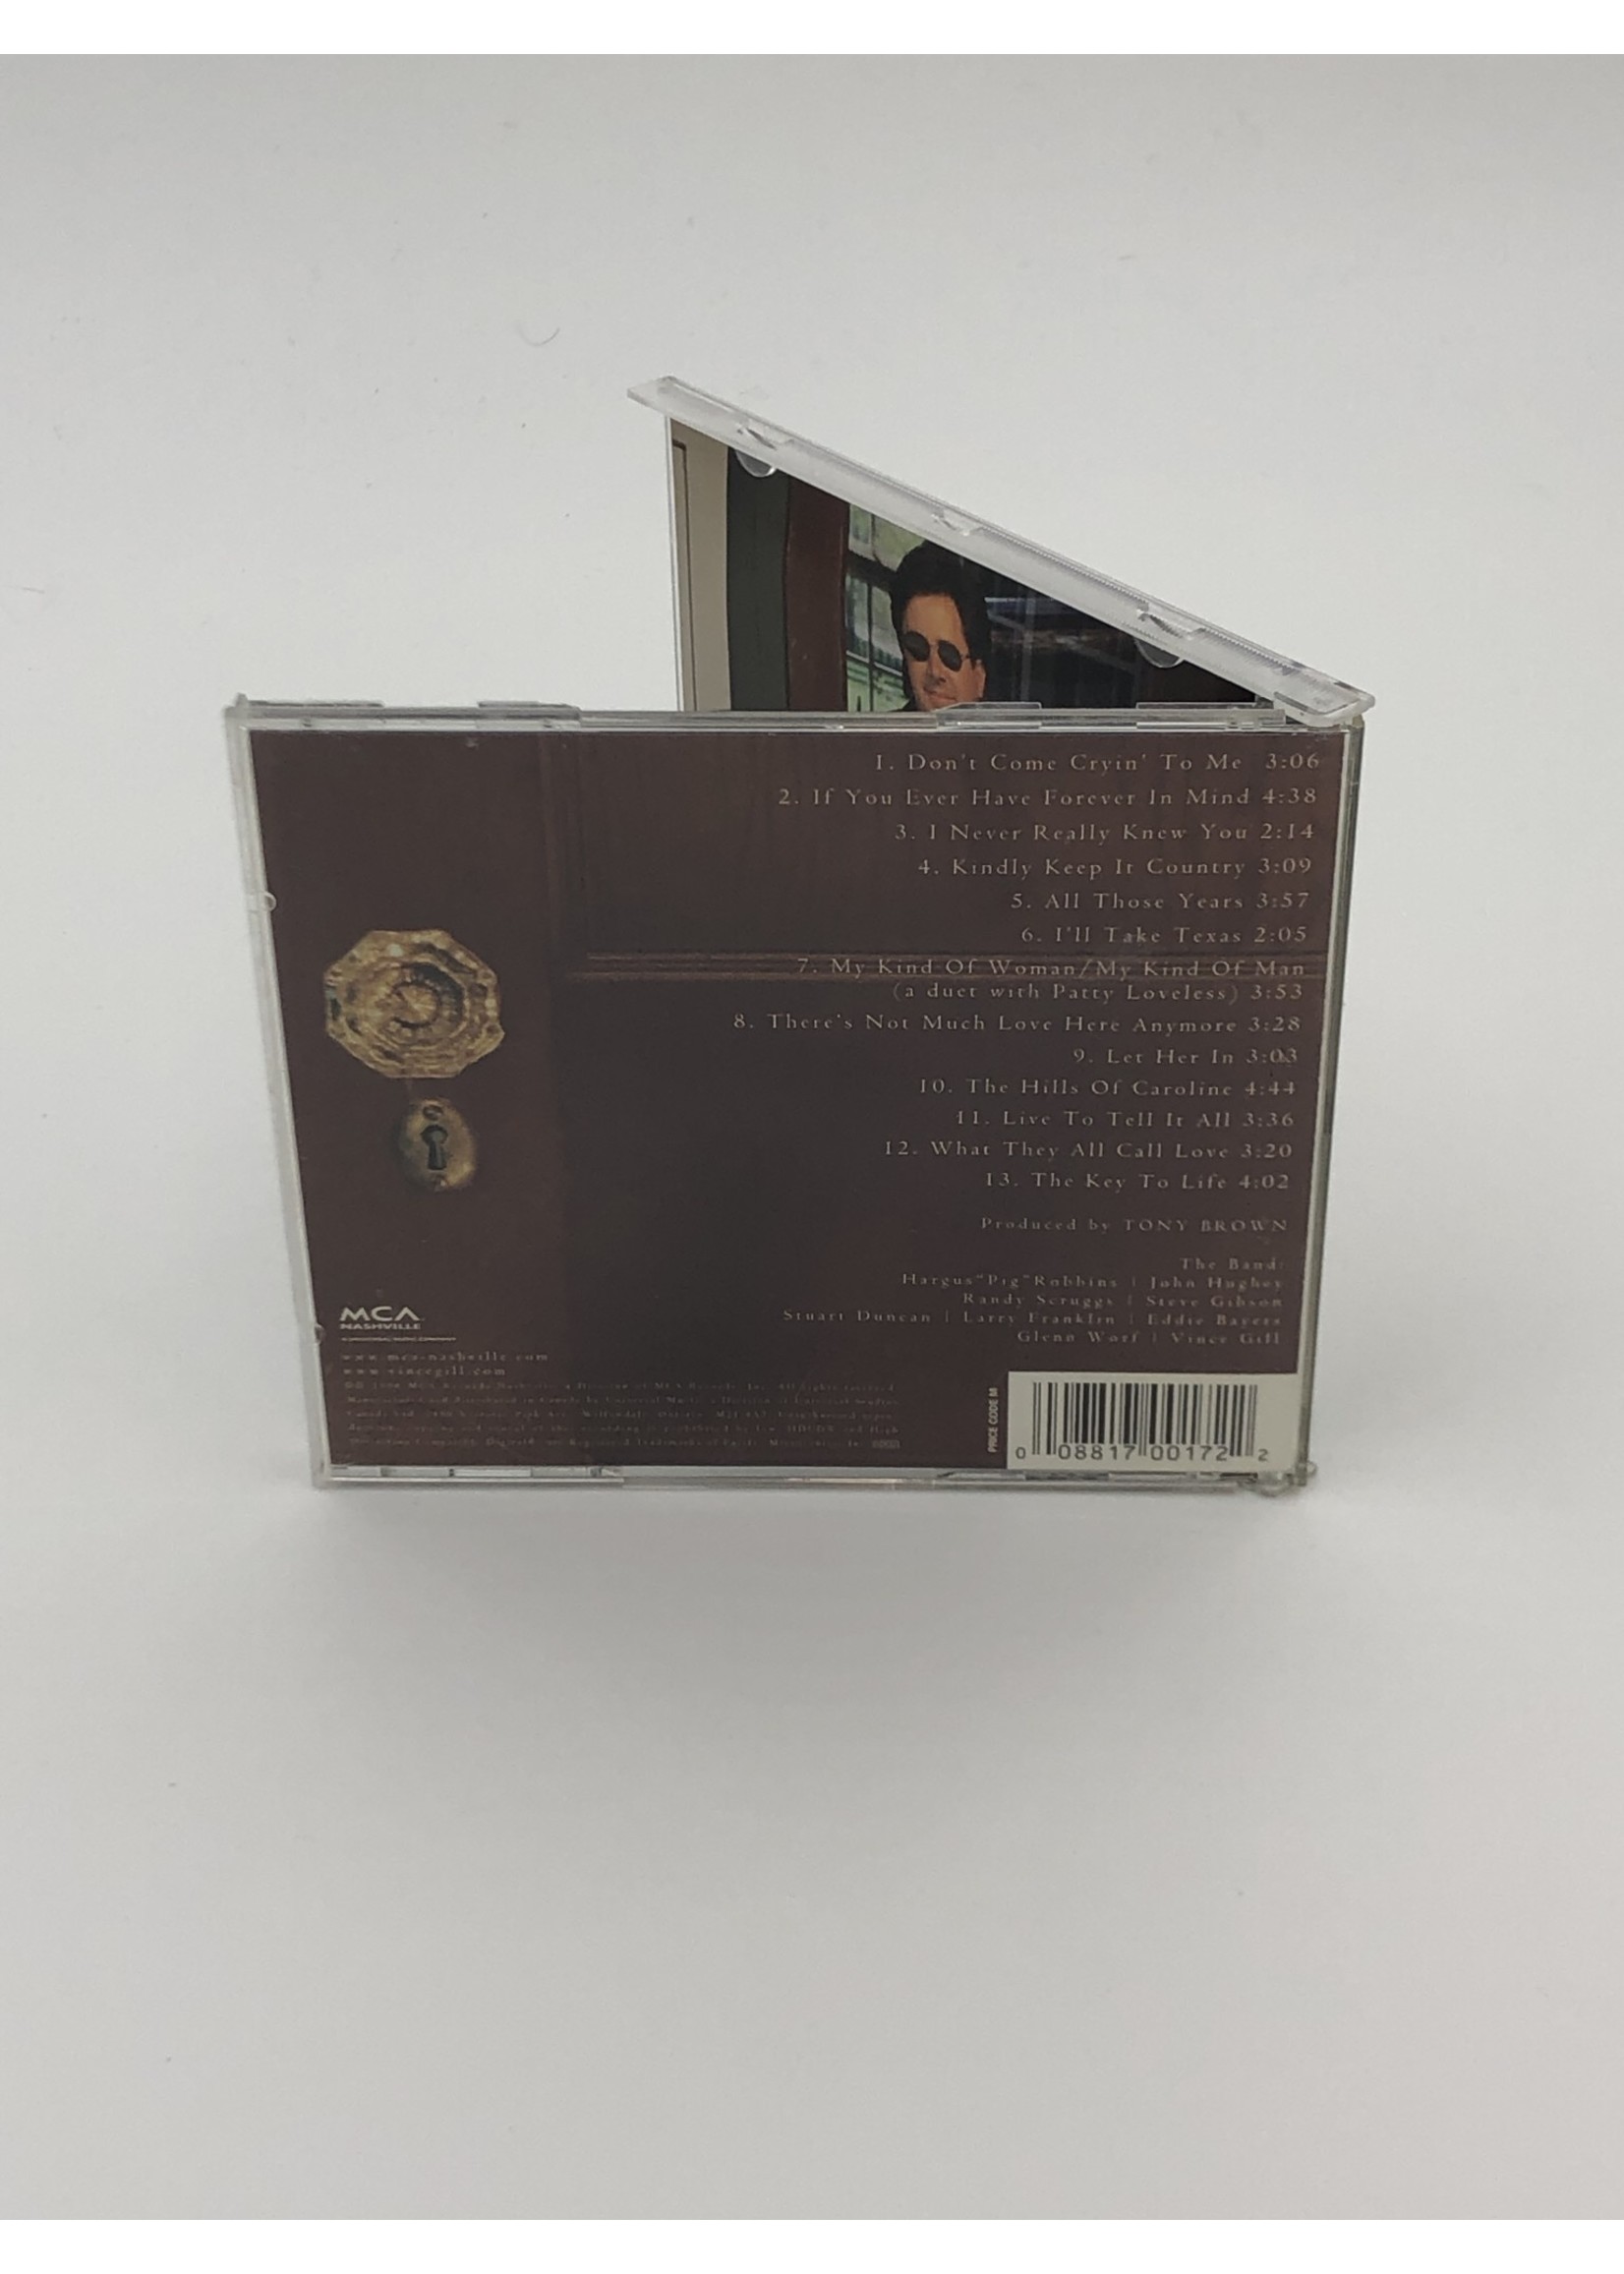 CD Vince Gill: The Key CD